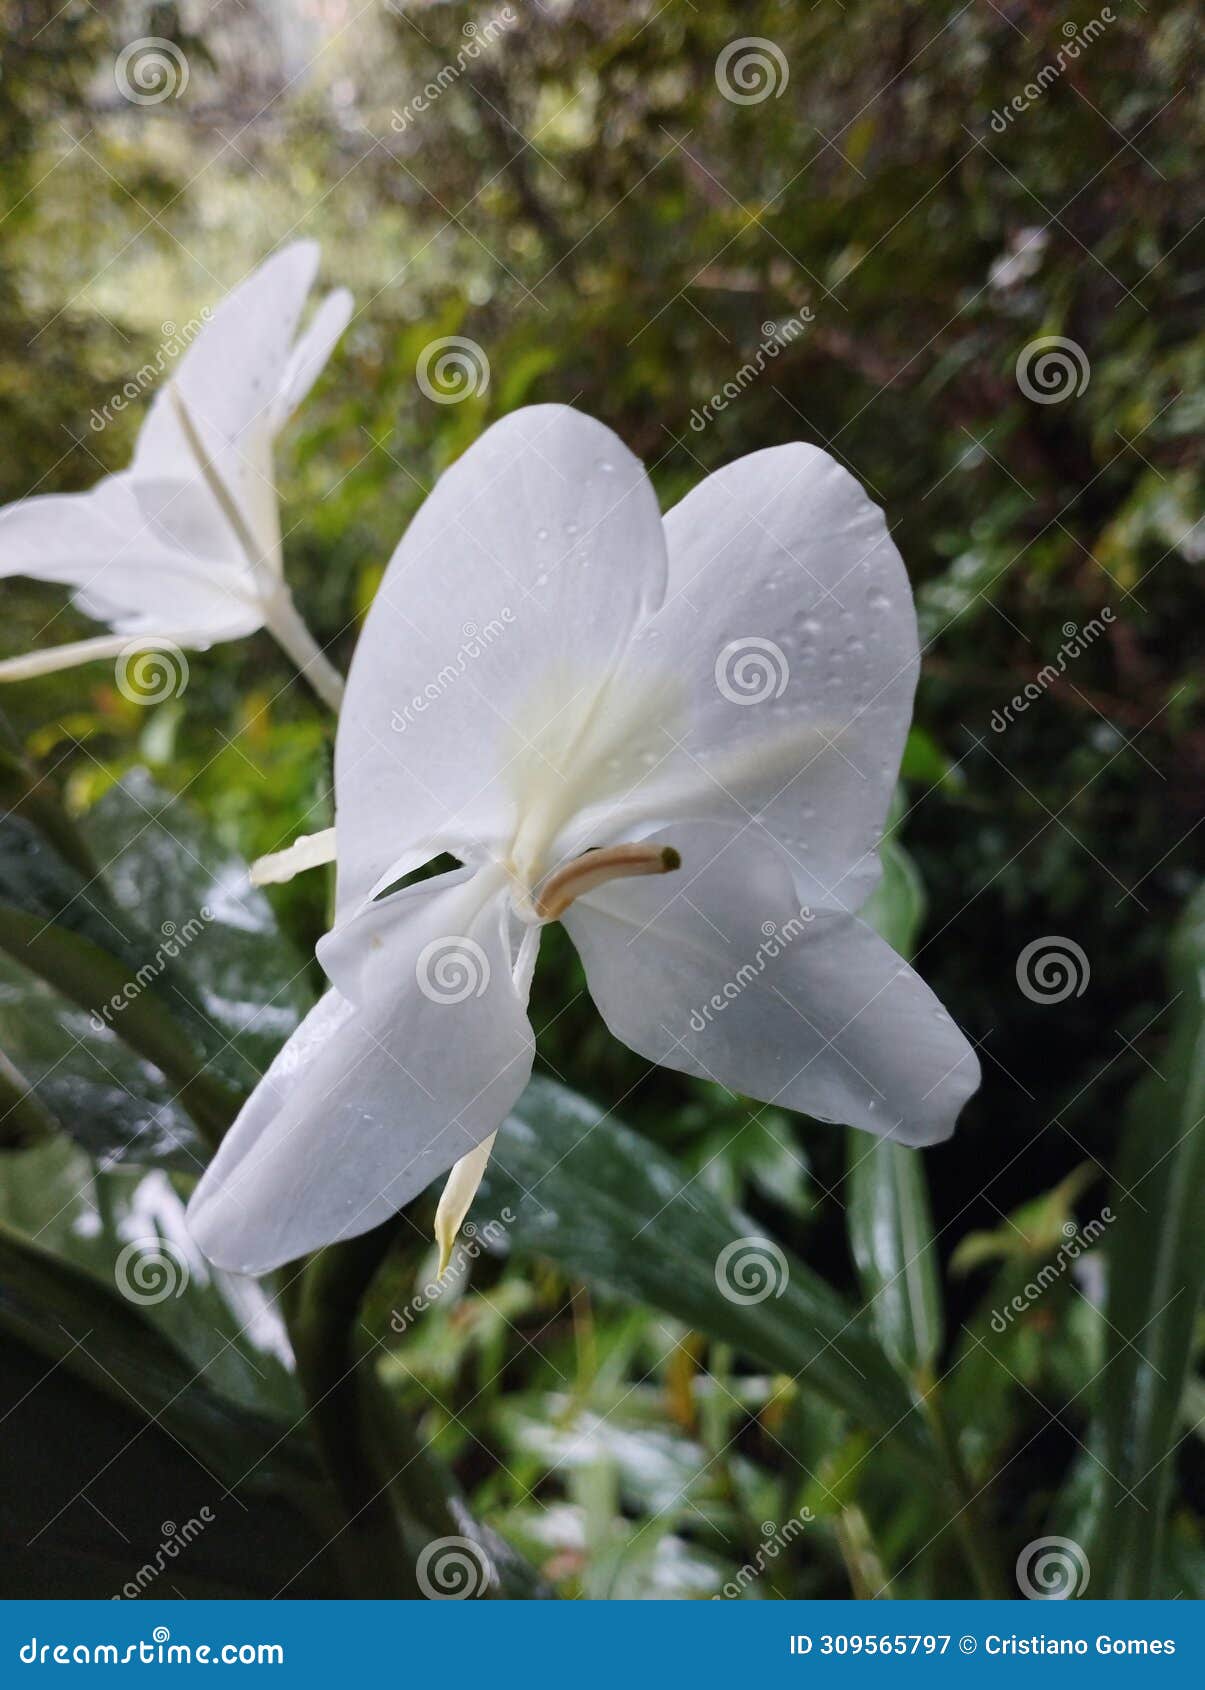 flower of hedychium coronarium (lirio-do-brejo) species of the zingiberaceae family